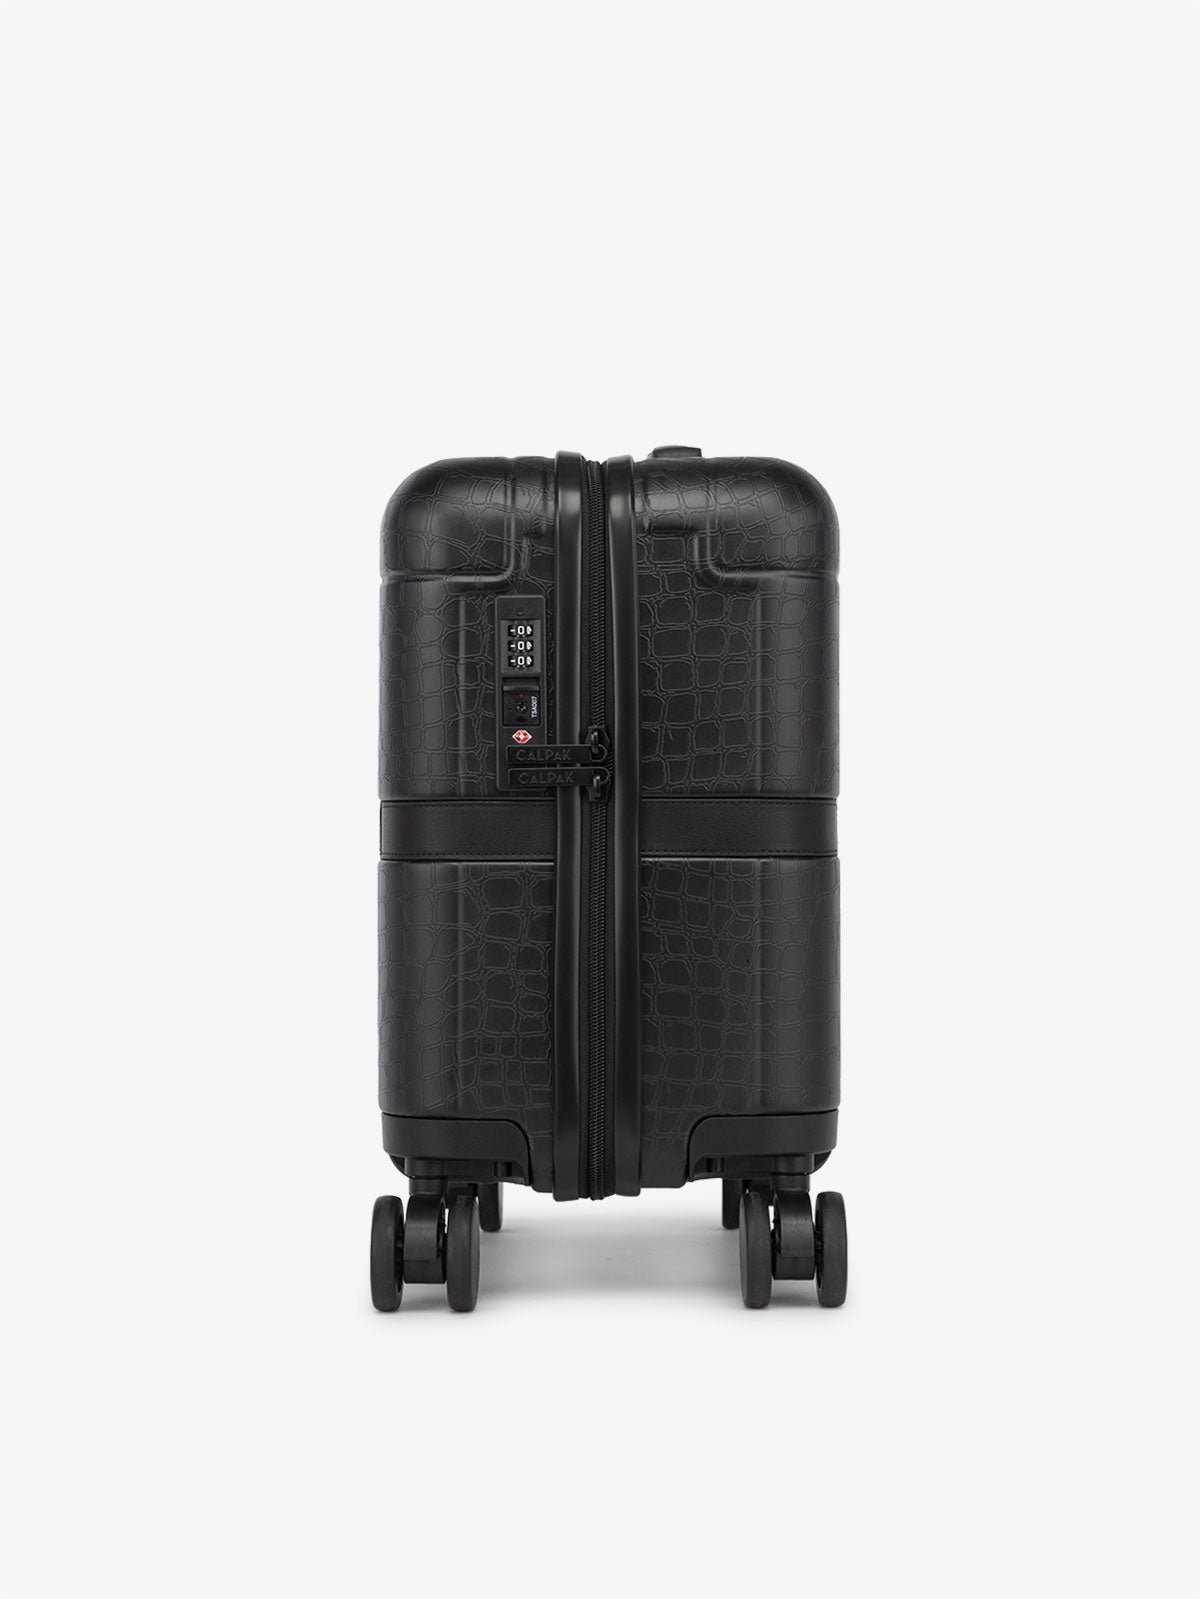 CALPAK TRNK mini luggage with TSA lock and 360 spinner wheels in black